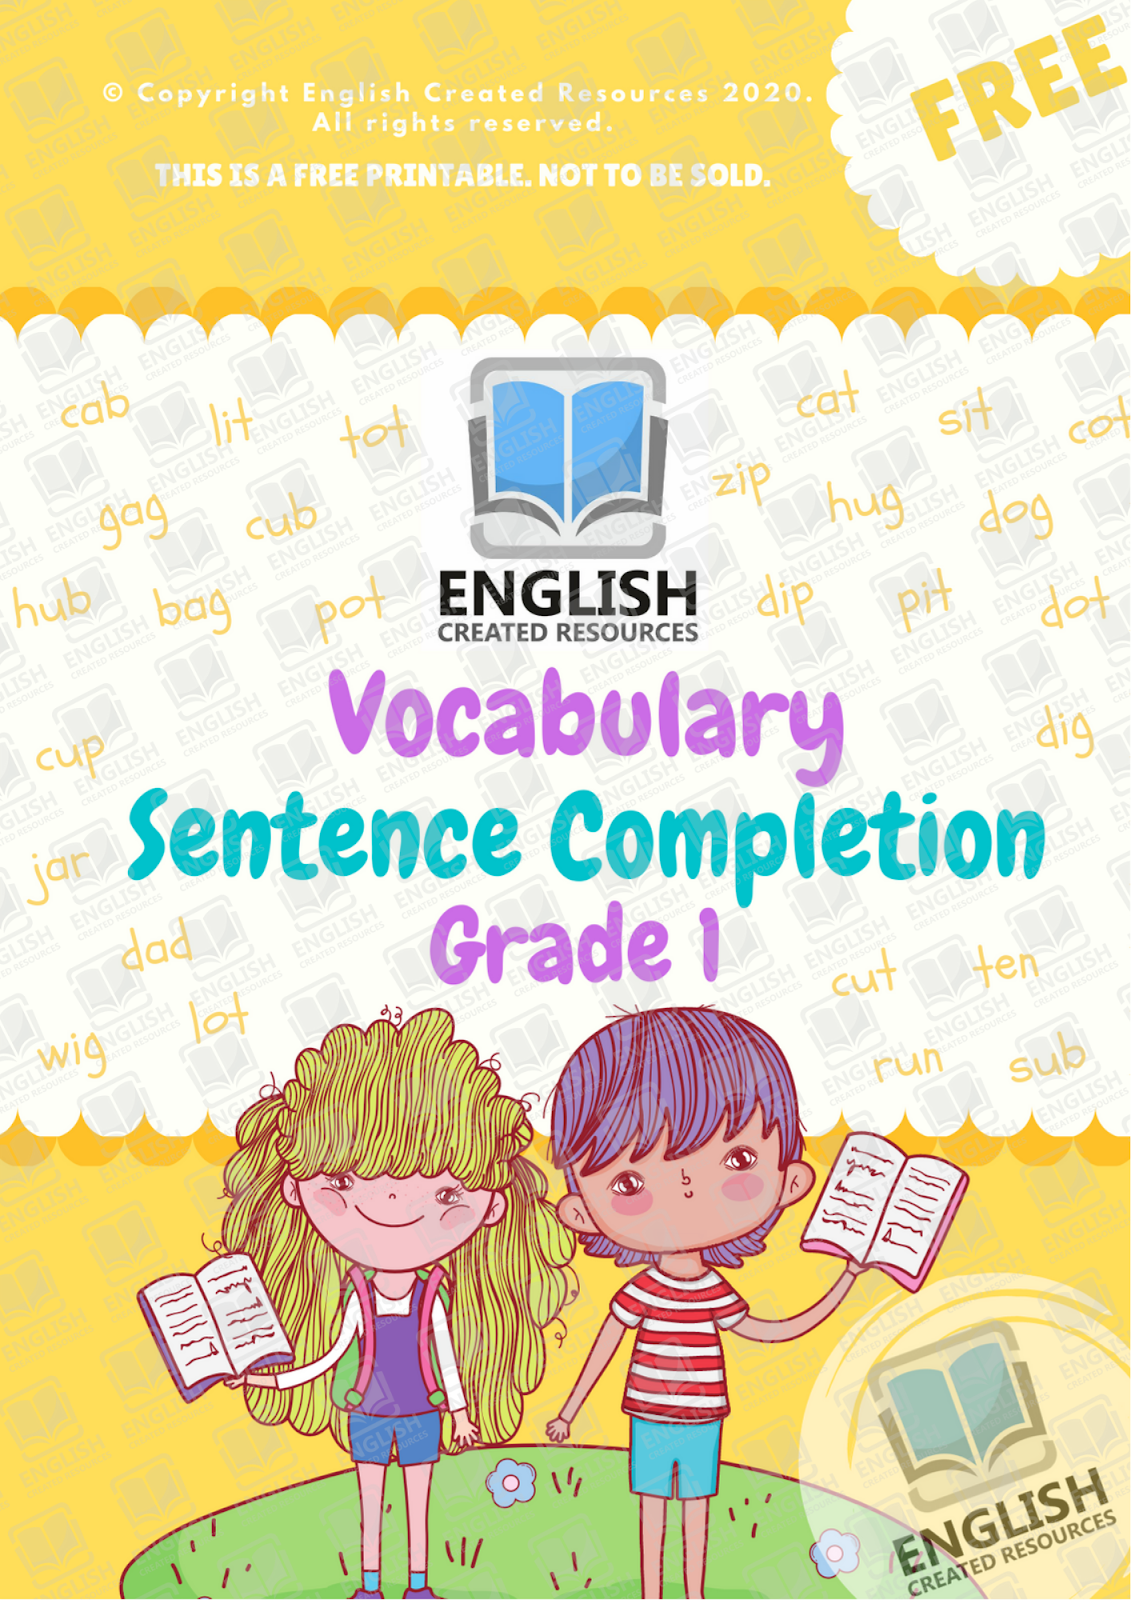 sentence-completion-worksheets-vocabulary-activities-classroom-activities-english-grammar